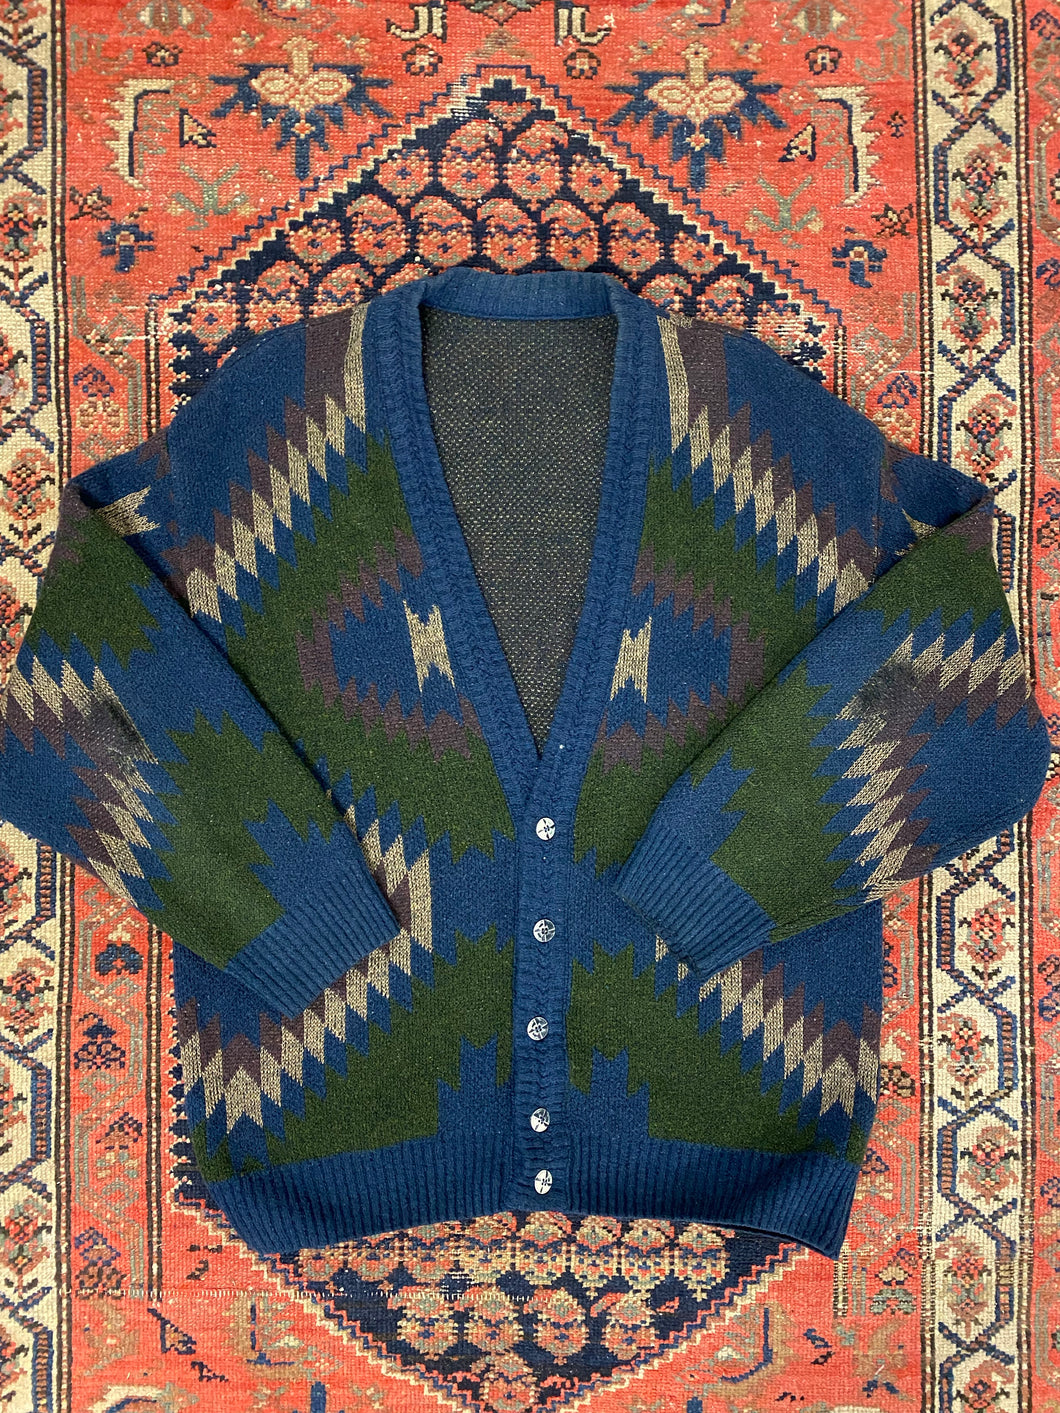 90s Patterned Knit Cardigan - XL